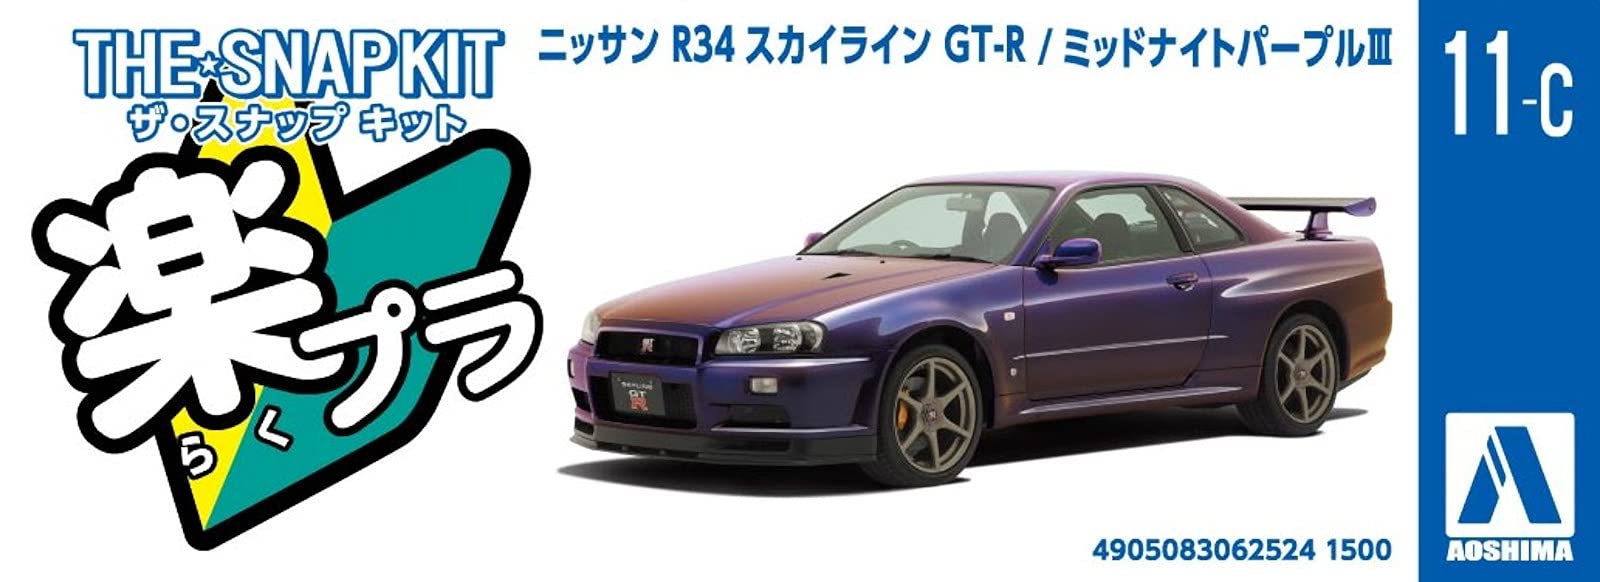 AOSHIMA The Snap Kit 1/32 Nissan R34 Skyline Gt-R Midnight Purple Lll Plastic Model